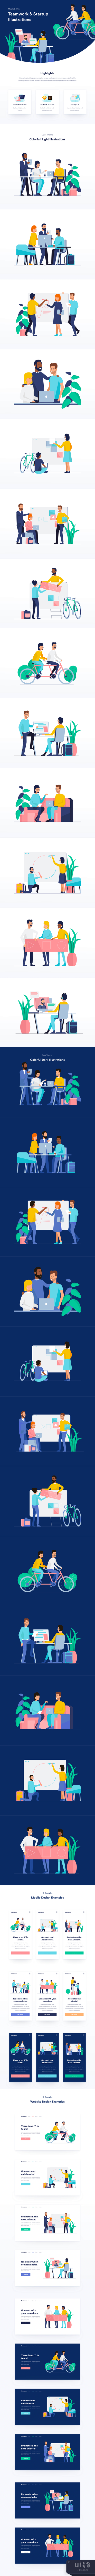 团队合作初创企业插图 (Teamwork  Startup Illustrations)插图